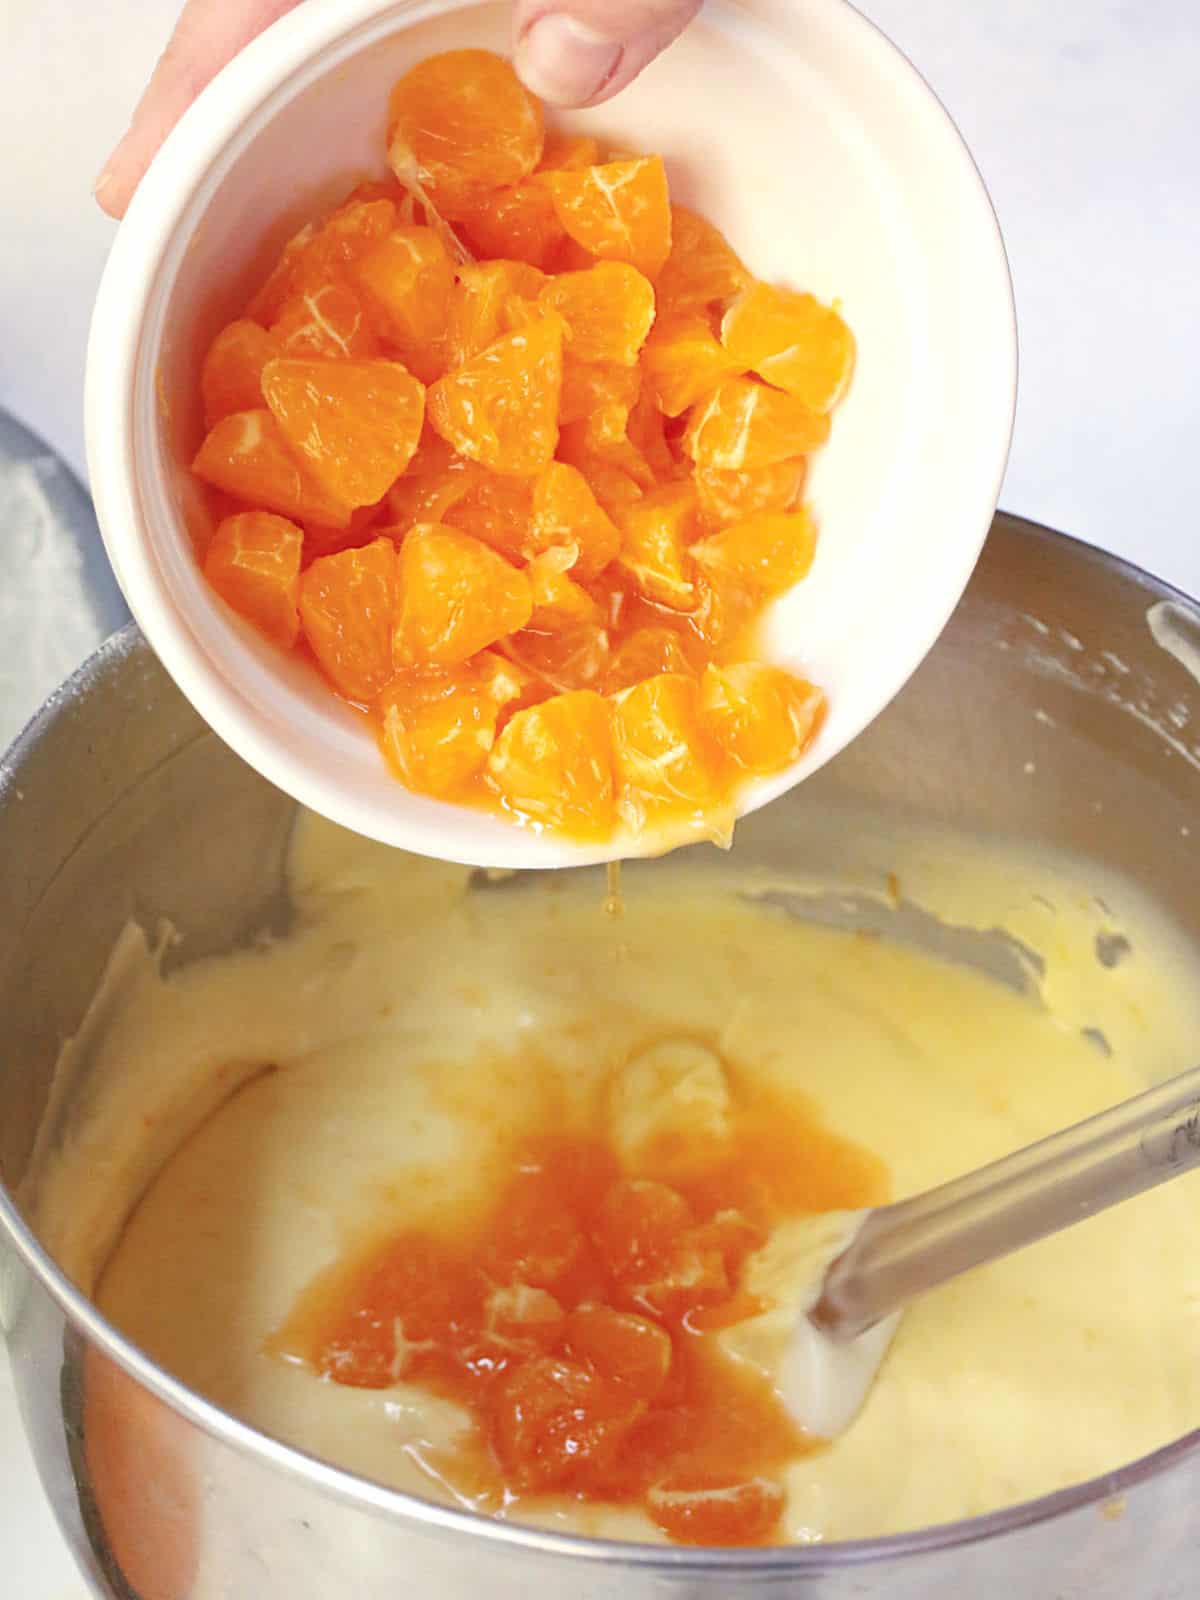 Adding oranges to a cake batter.